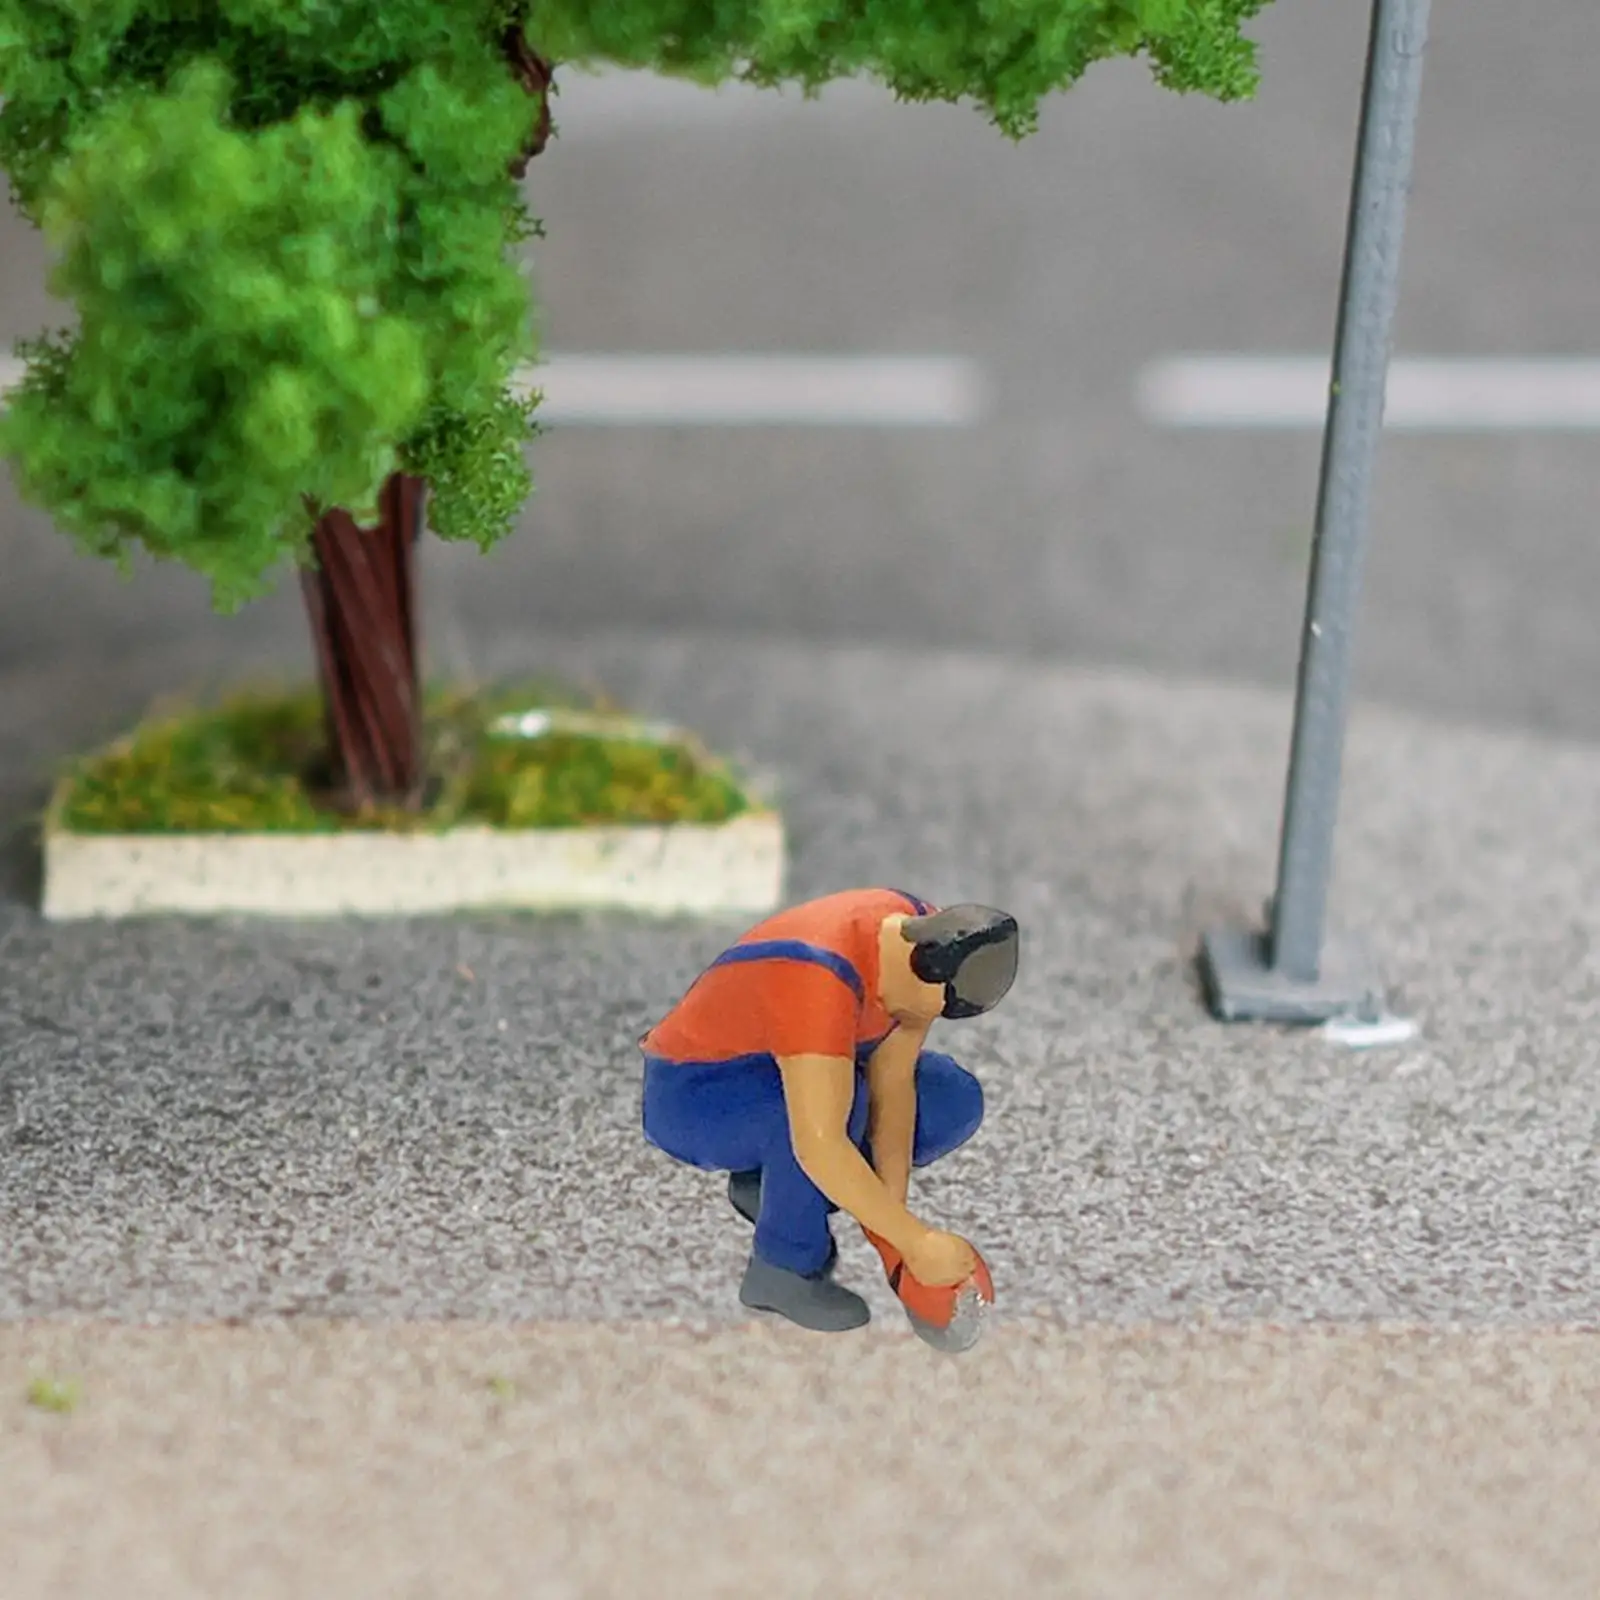 1/64 Figure Repairman Accessories Miniature Scenes Tiny People DIY Projects Micro Landscape Architecture Model Layout Dioramas